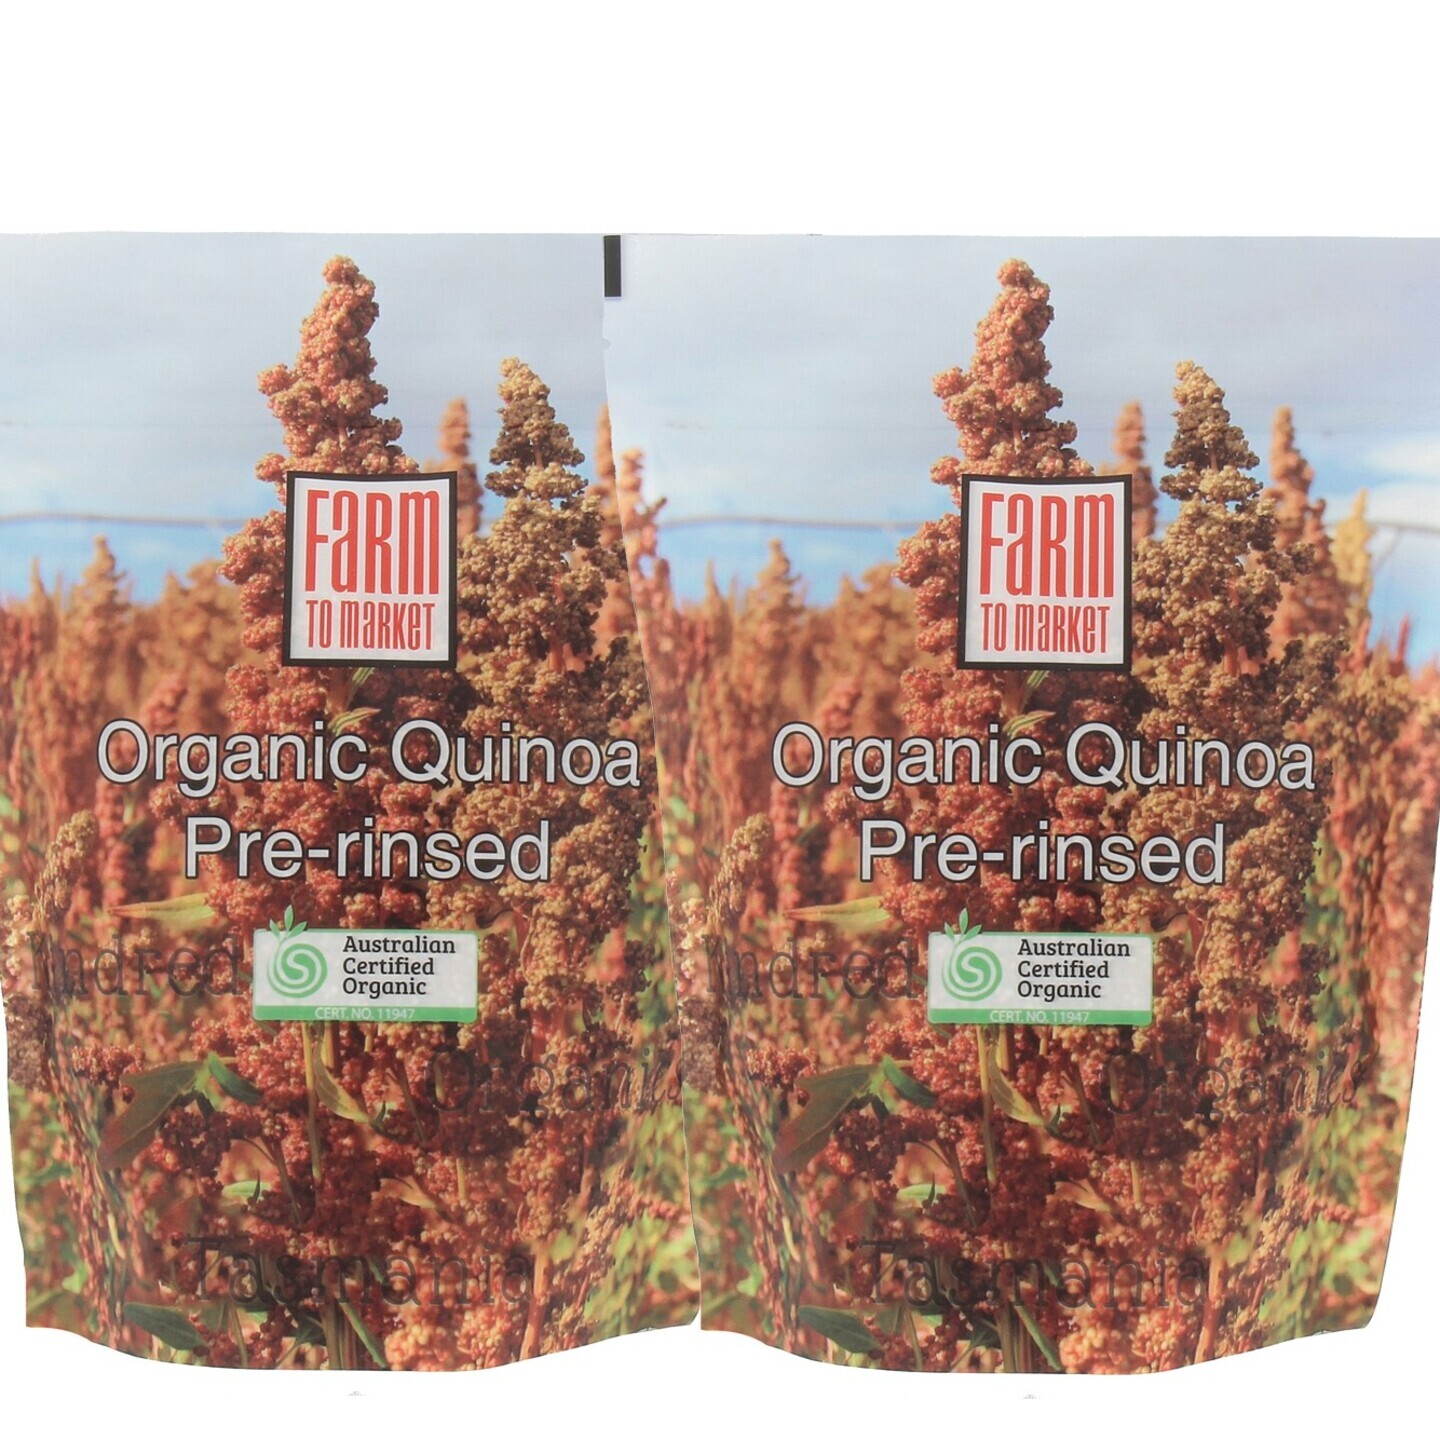 Australian Organic Quinoa Pre-rinsed